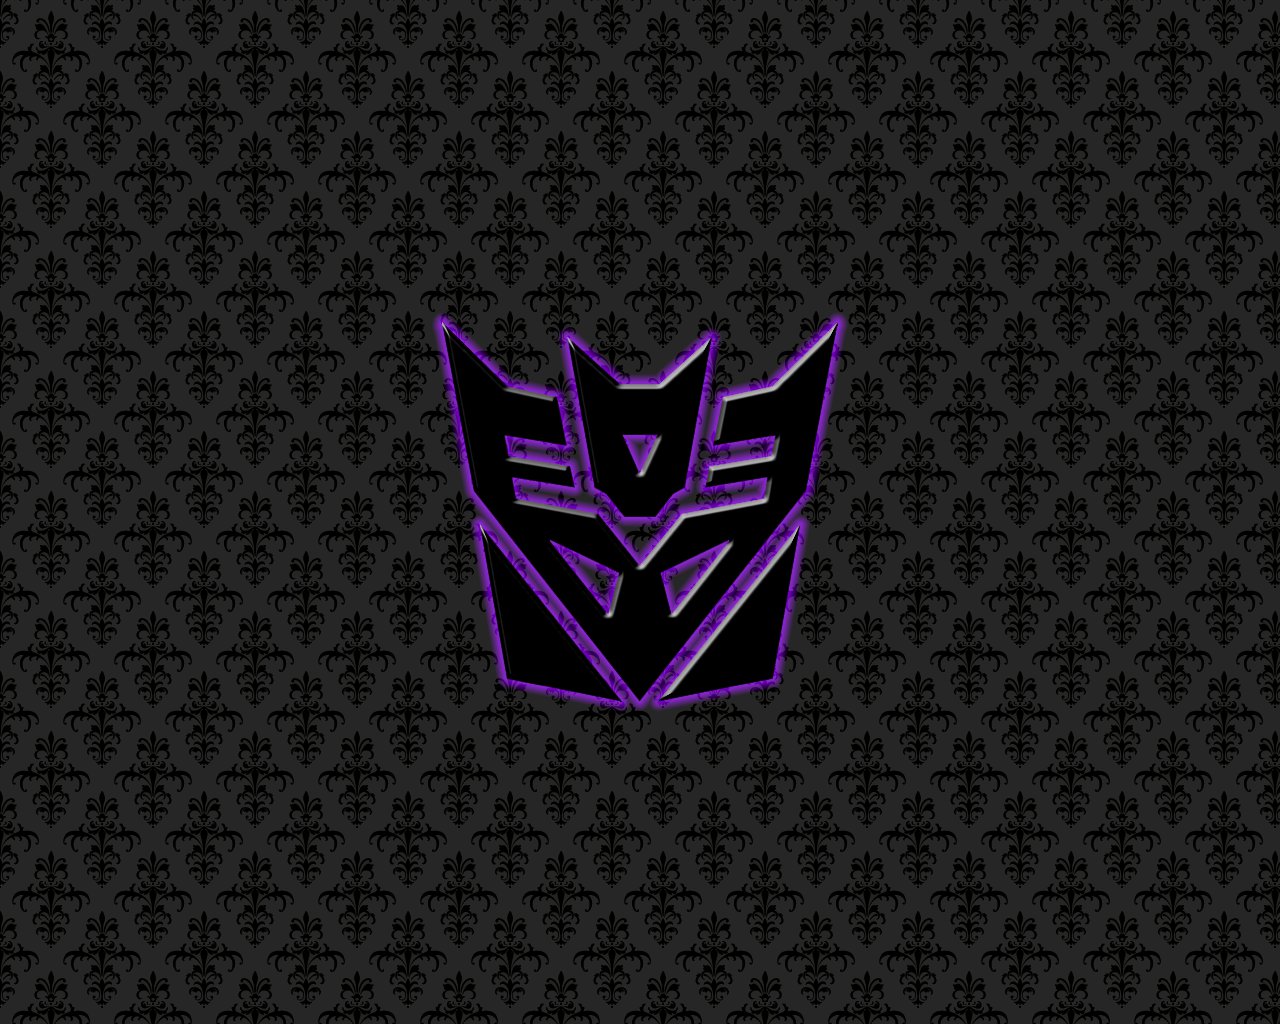 Decepticon Logo Wallpaper Wide HD